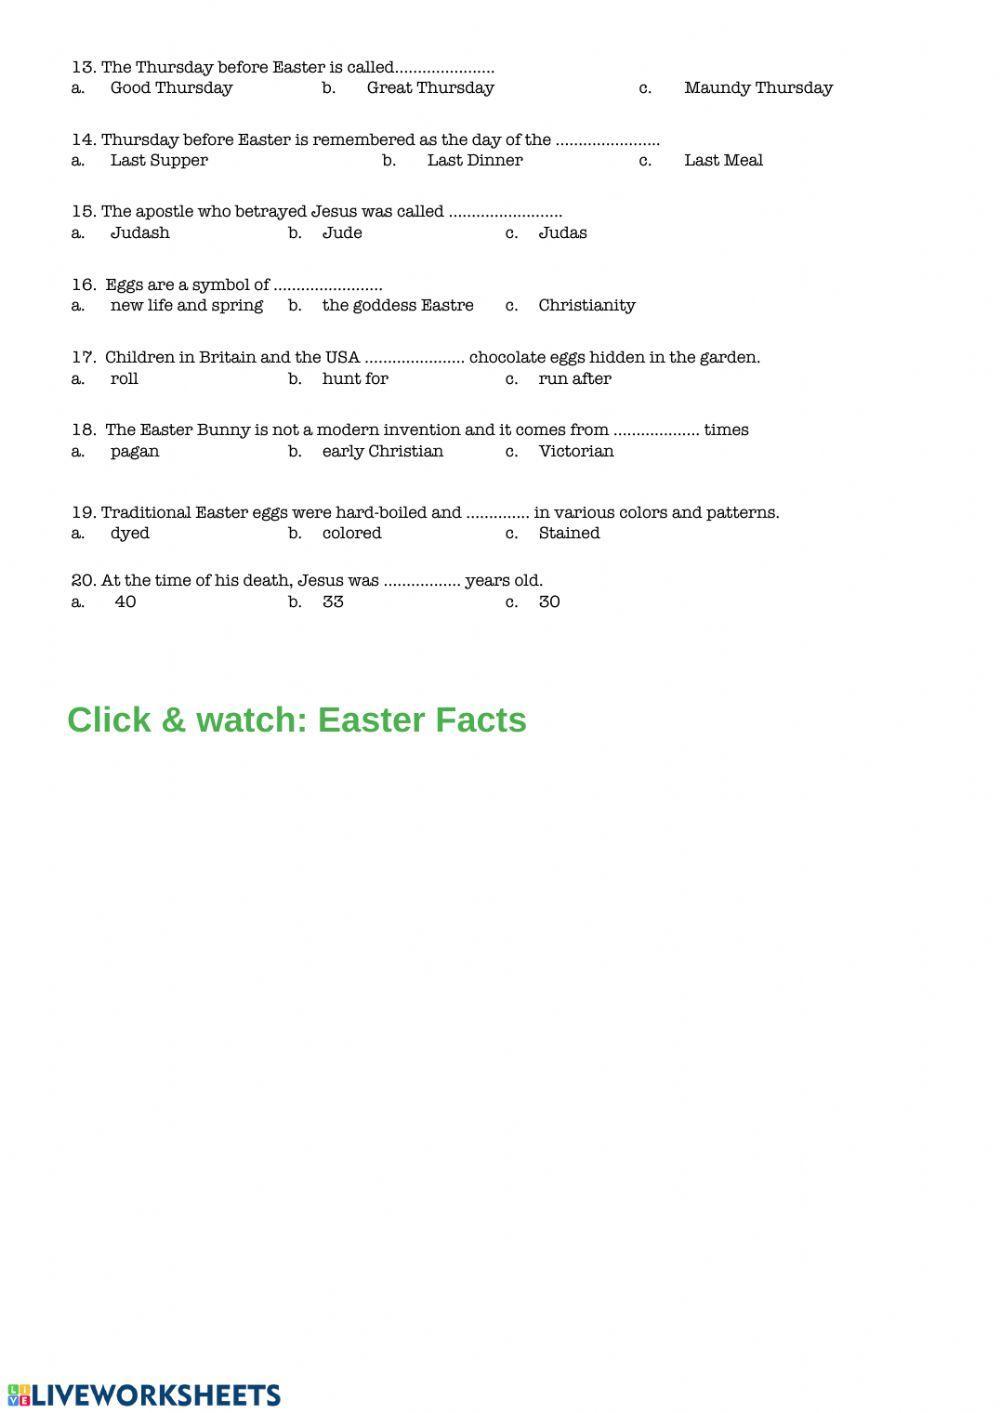 Easter quiz